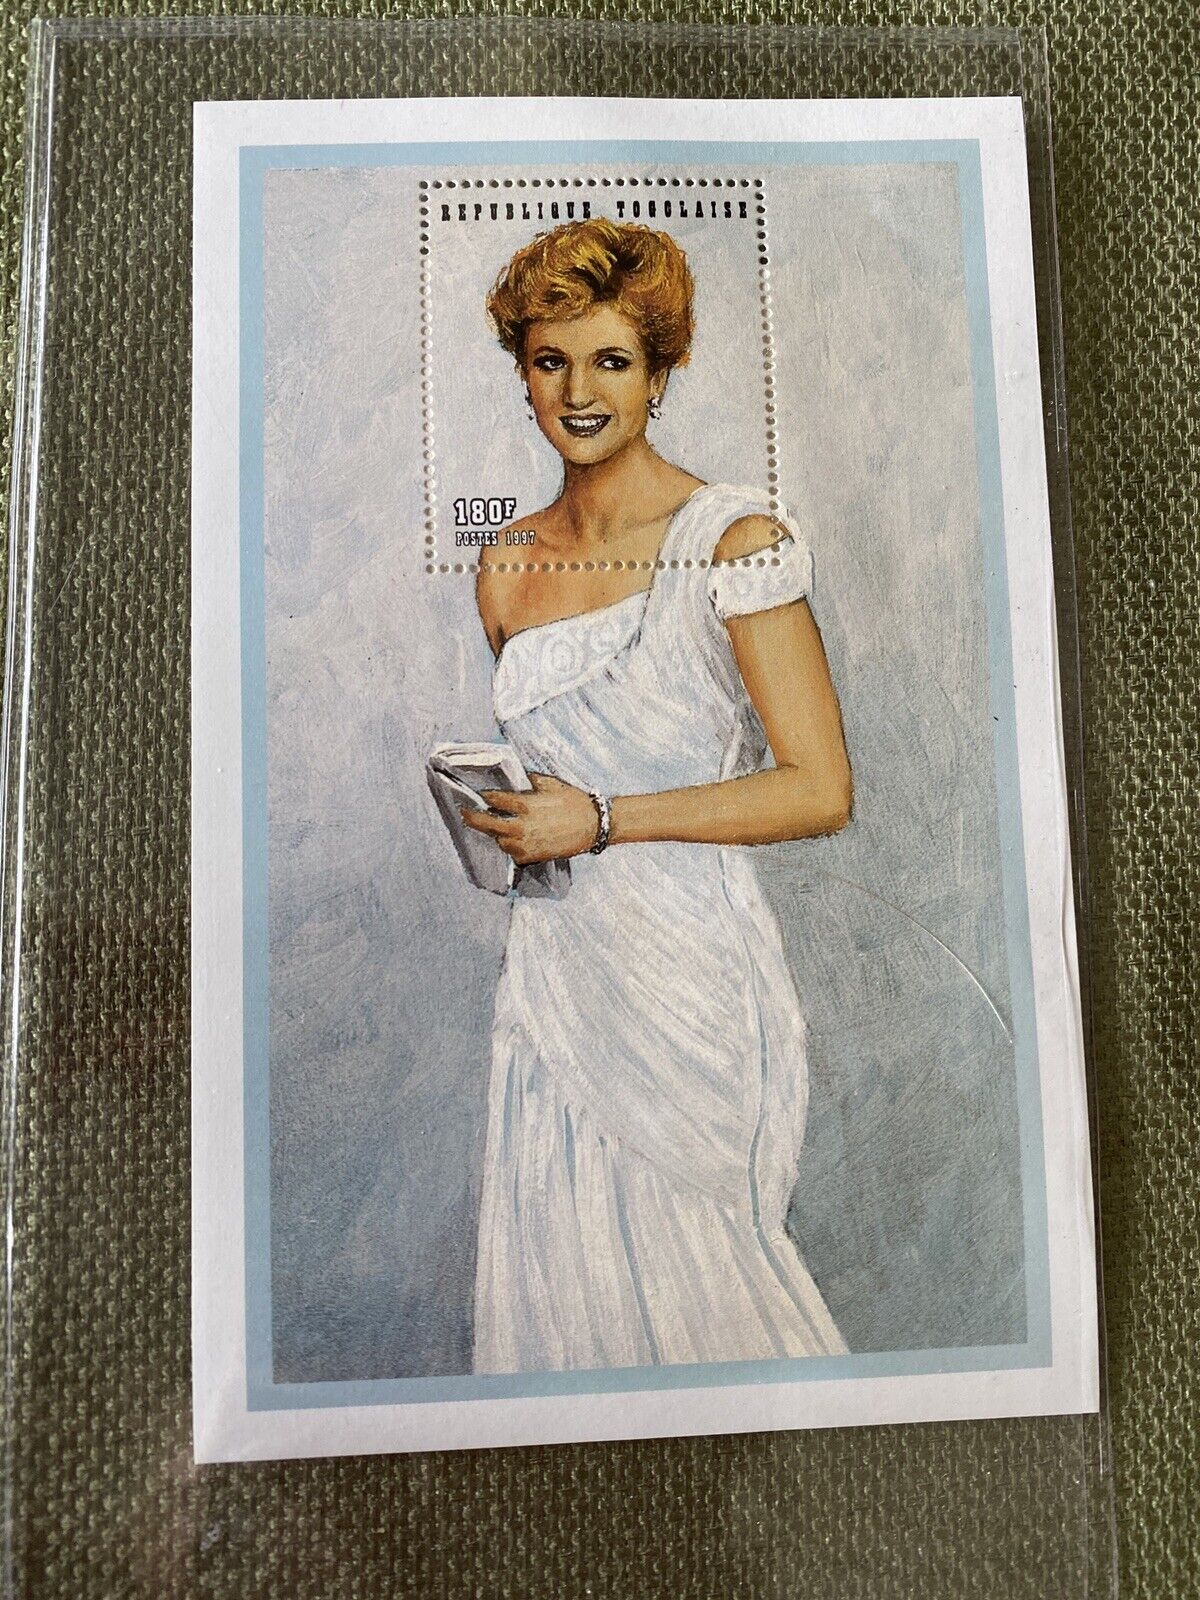 Princess Diana White Chiffon Evening Dress Commemorative Stamp Of Togo 